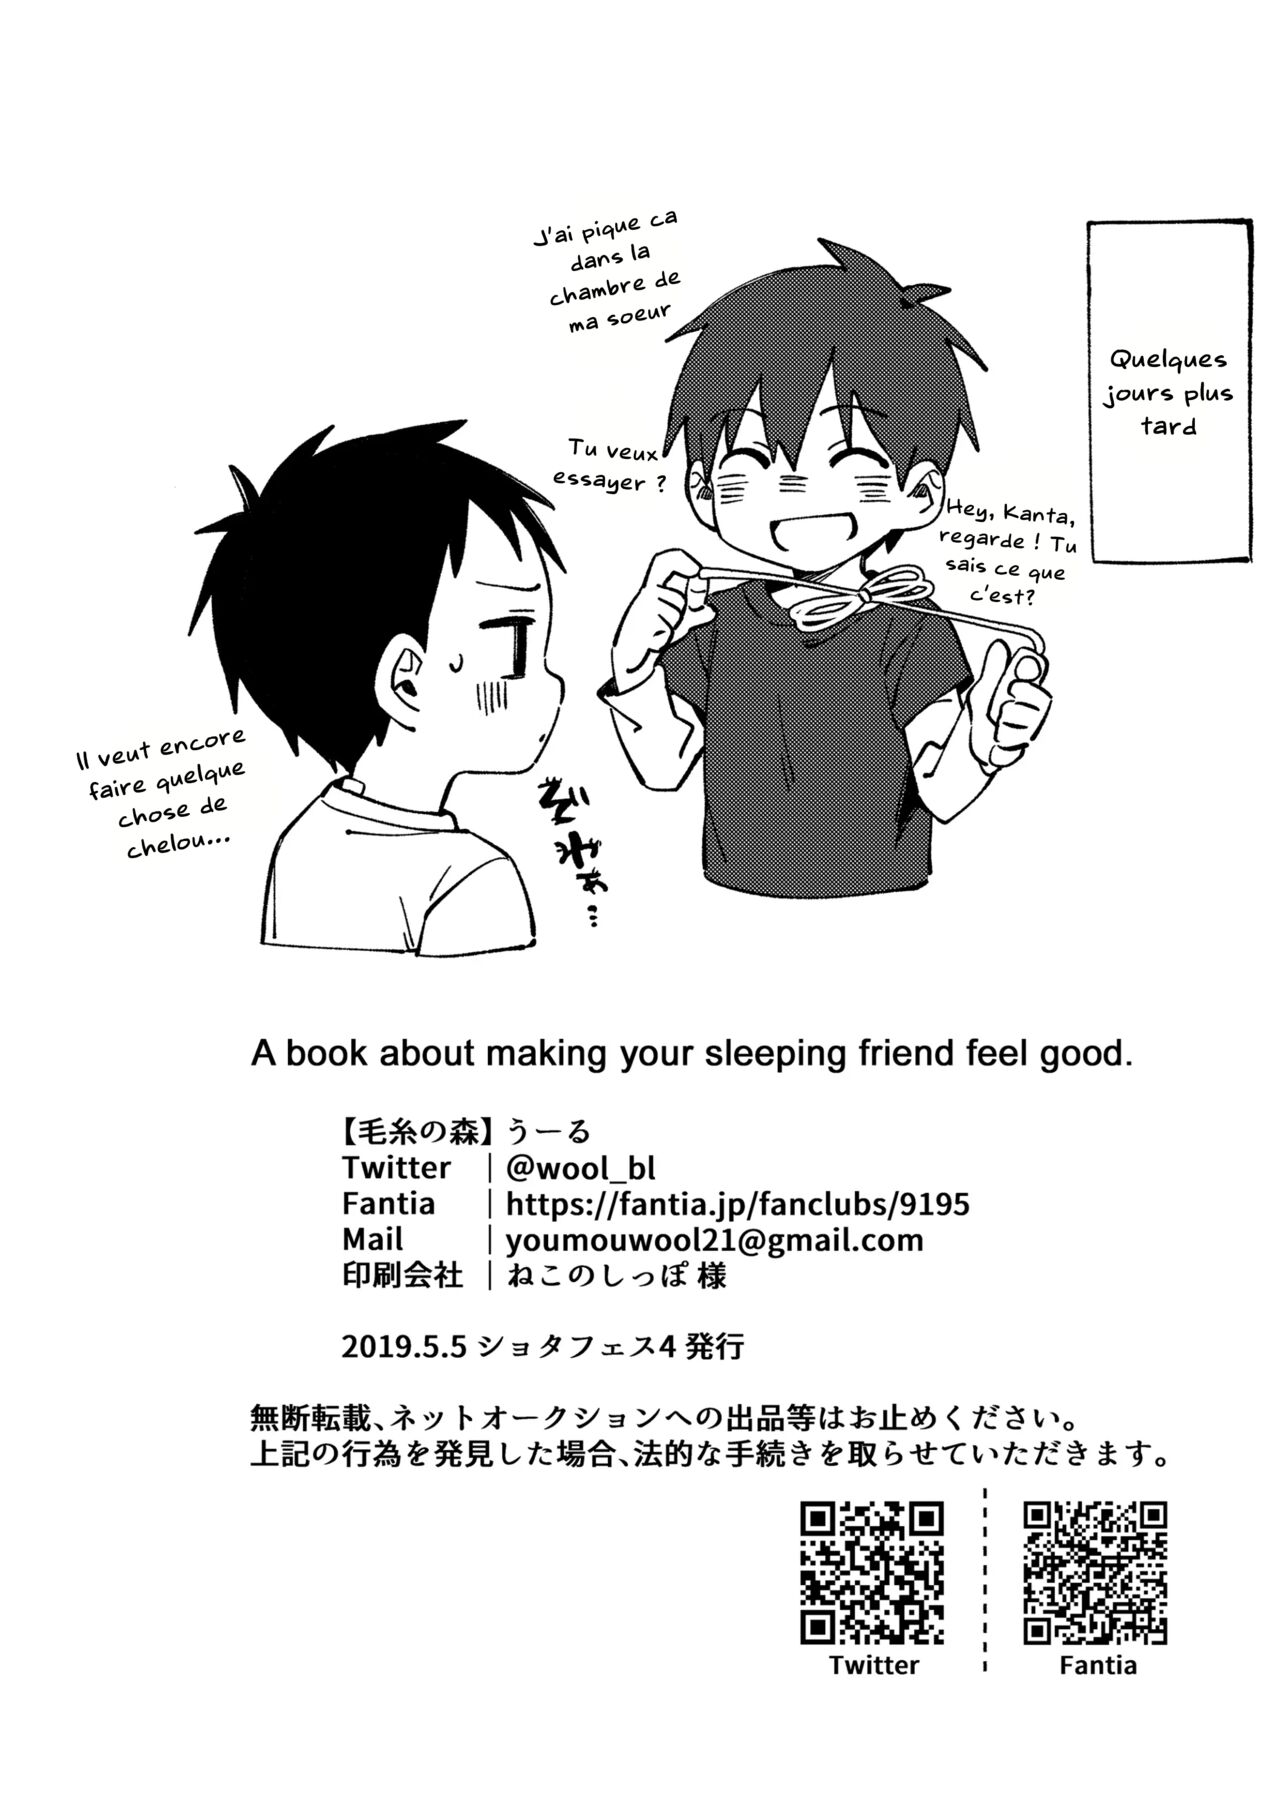 Neteiru Yuujin o Kimochiyoku Saseteageru Hon  Un livre qui mettra votre ami endormis à laise numero d'image 17